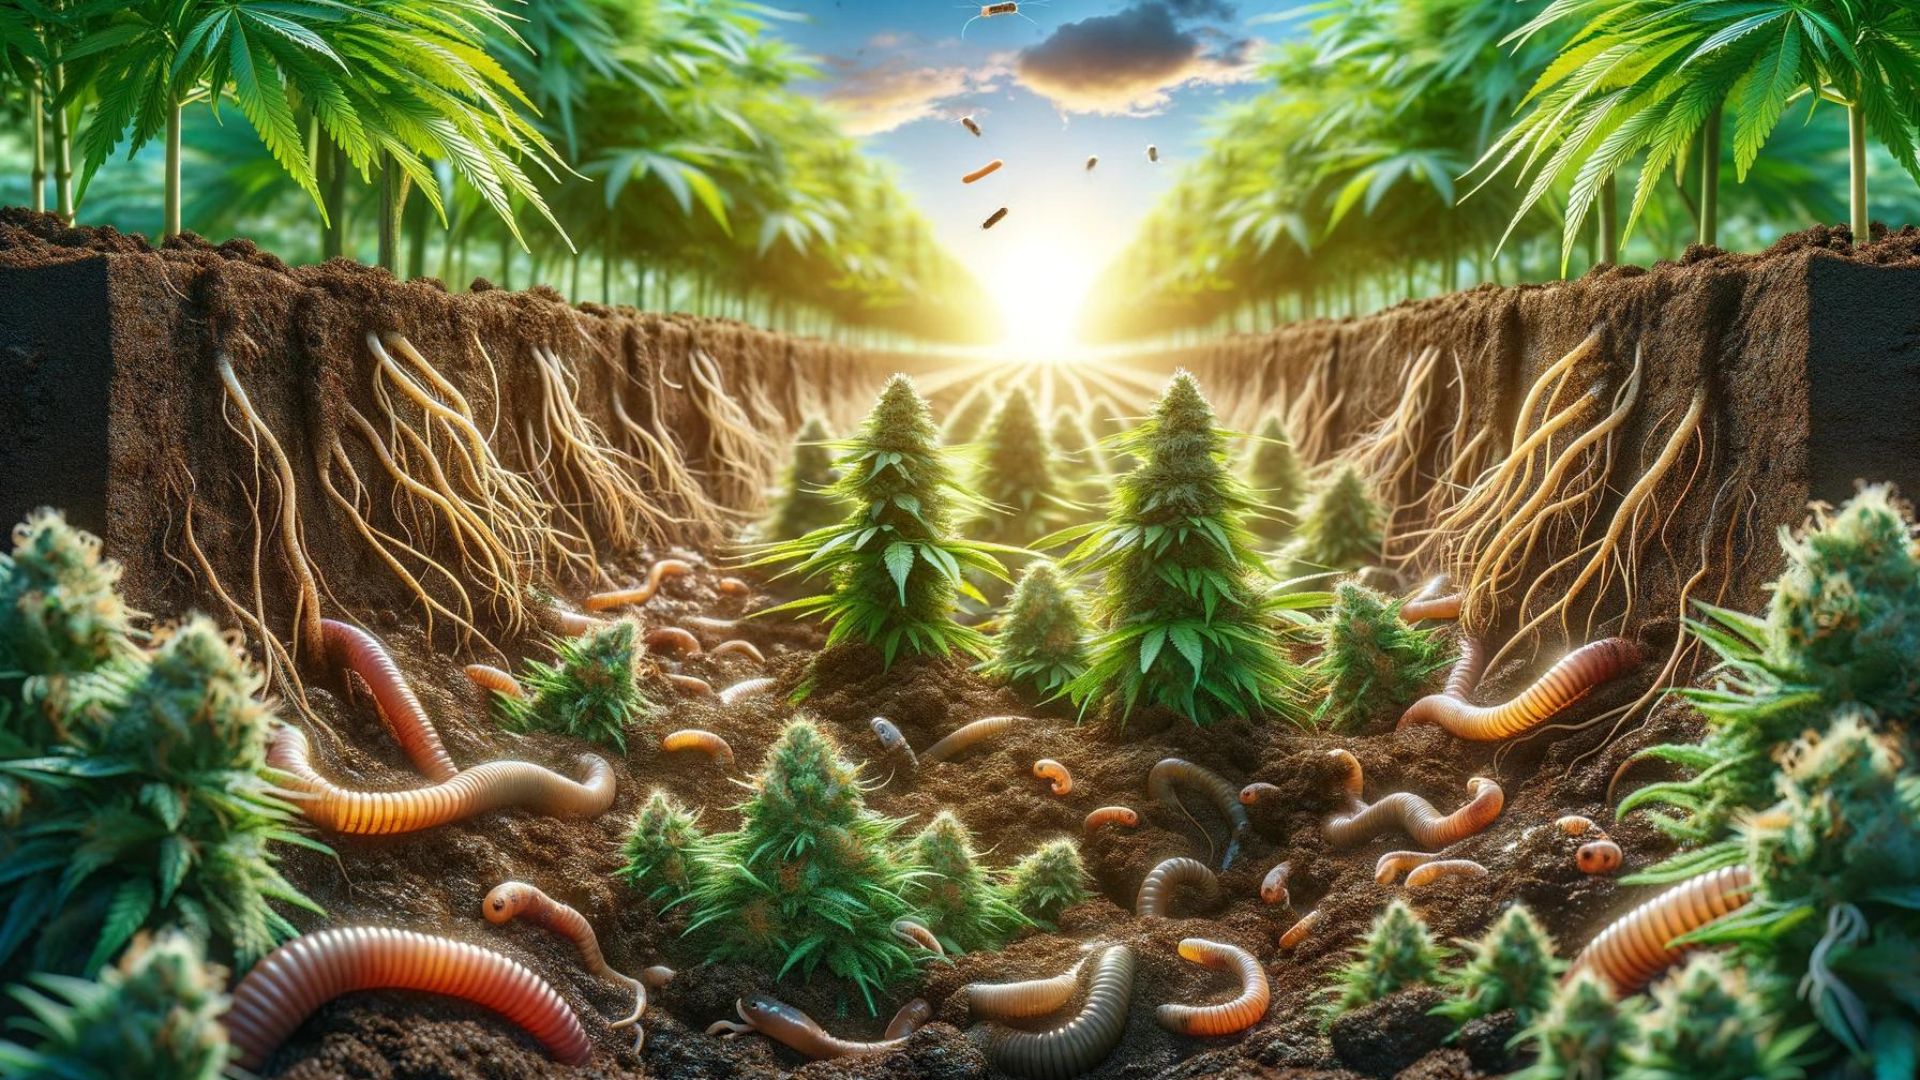 How Do You Make Organic Living Soil